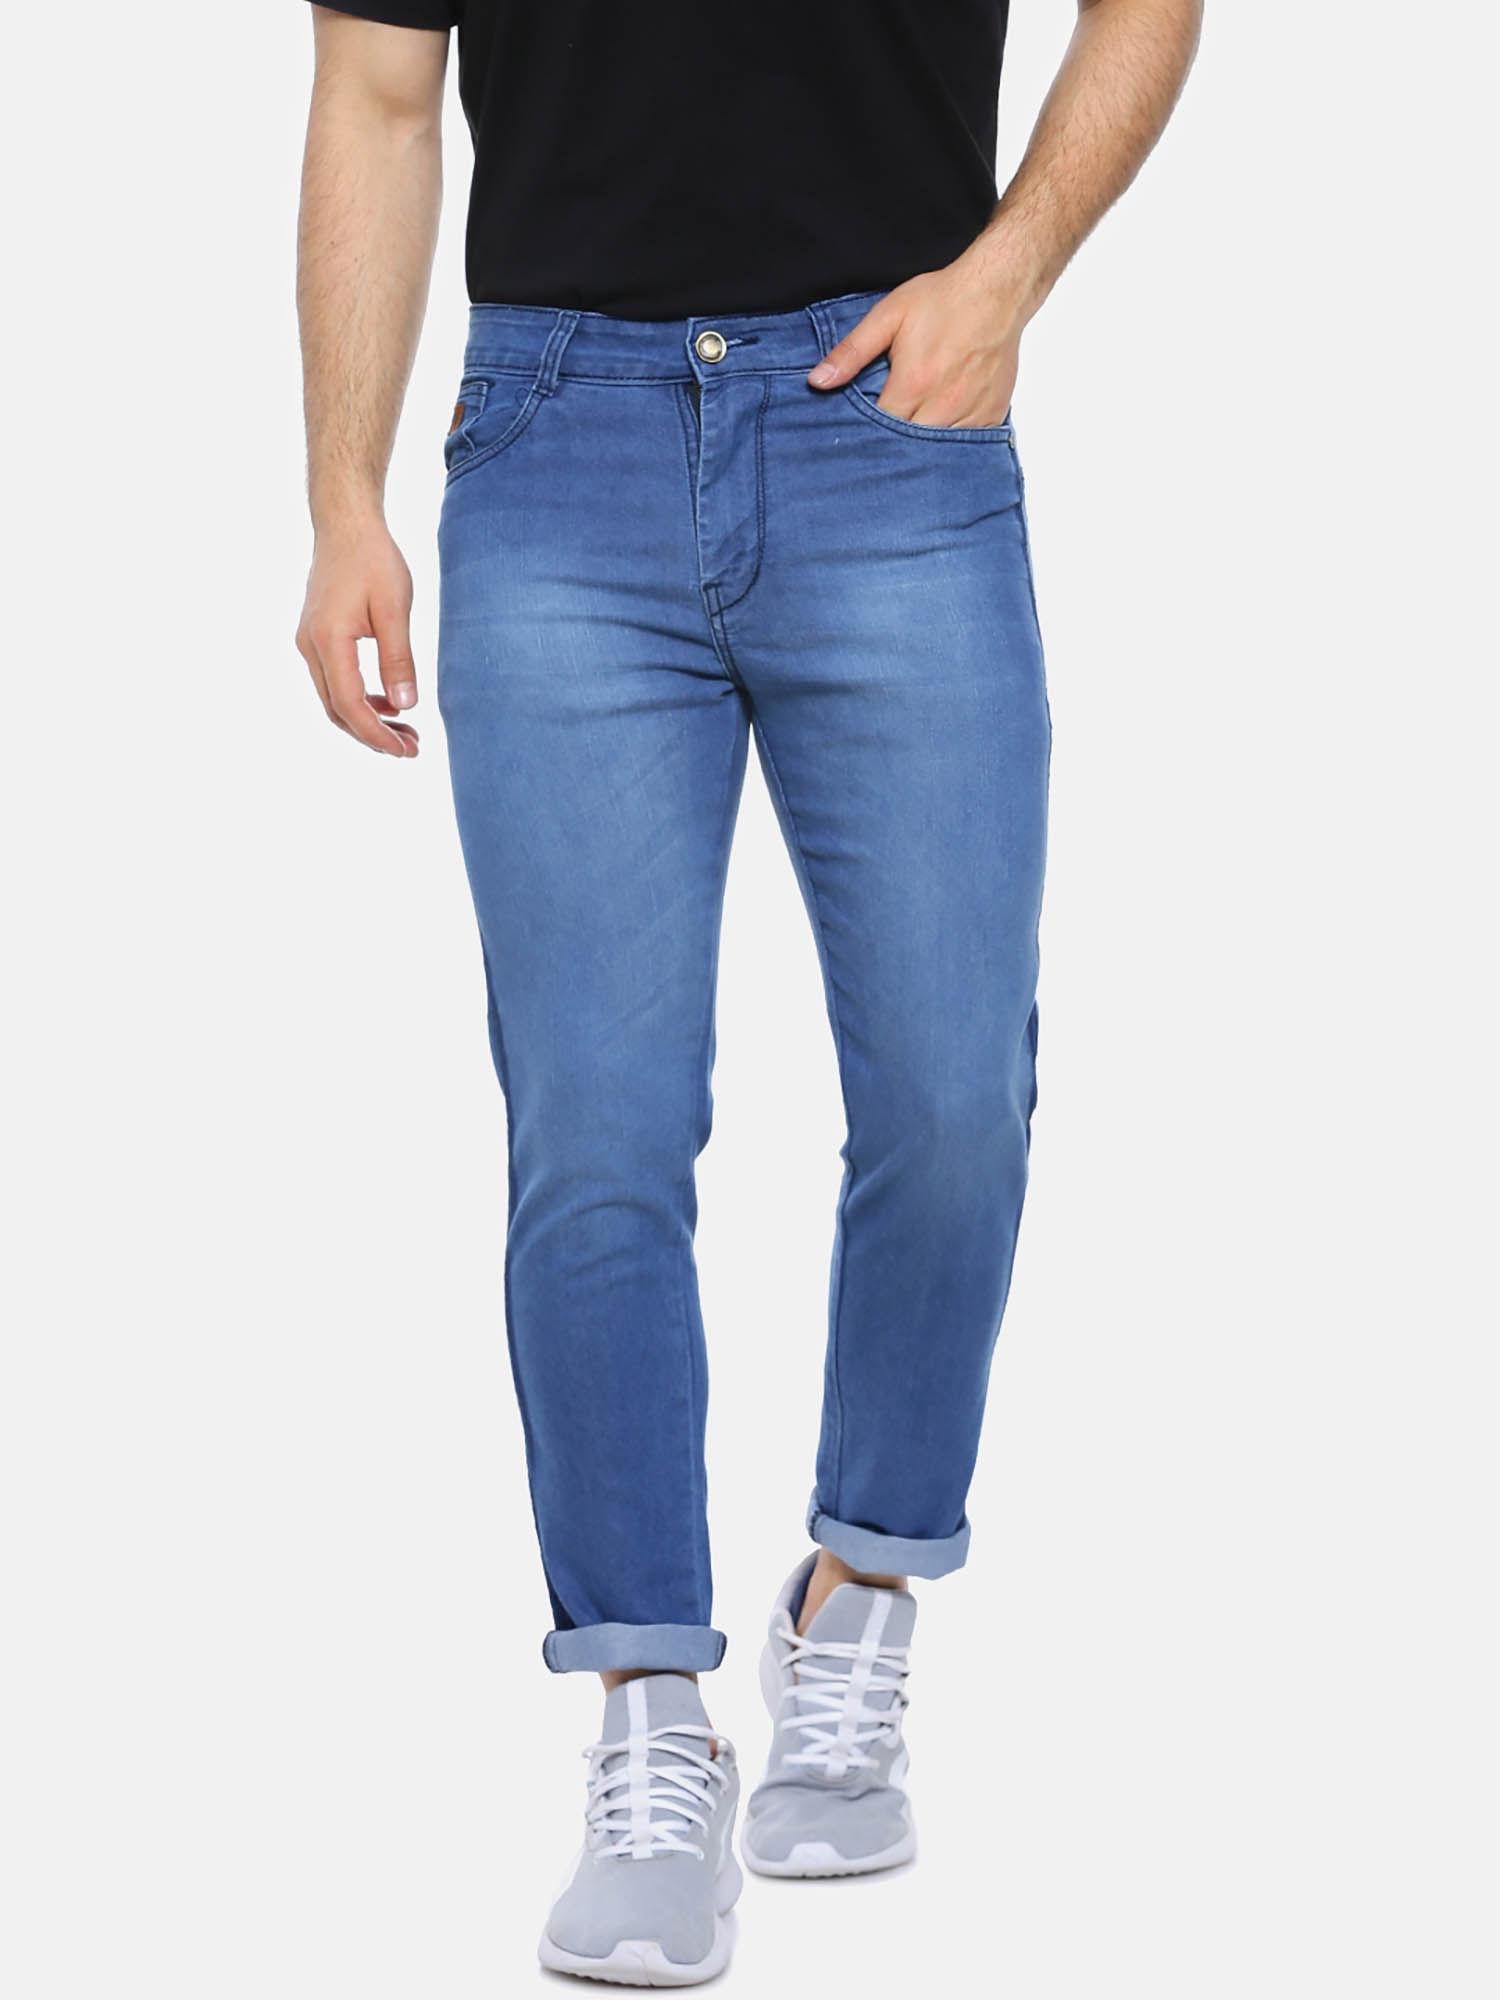 men blue jeans with side stripes